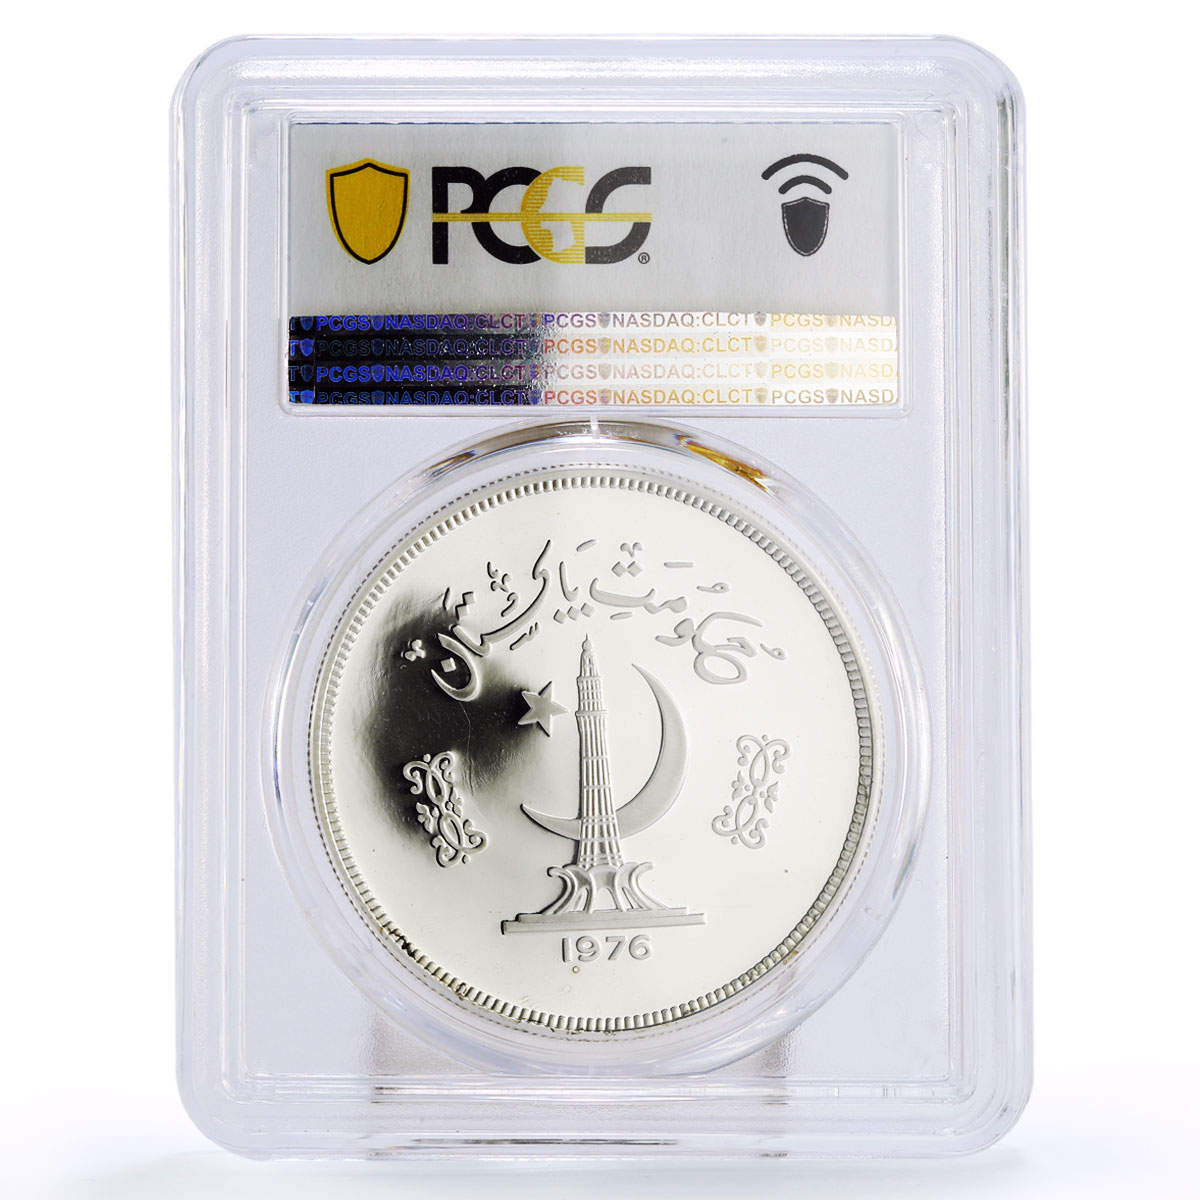 Pakistan 150 rupees WWF series Gavial Crocodile PR68 PCGS silver coin 1976